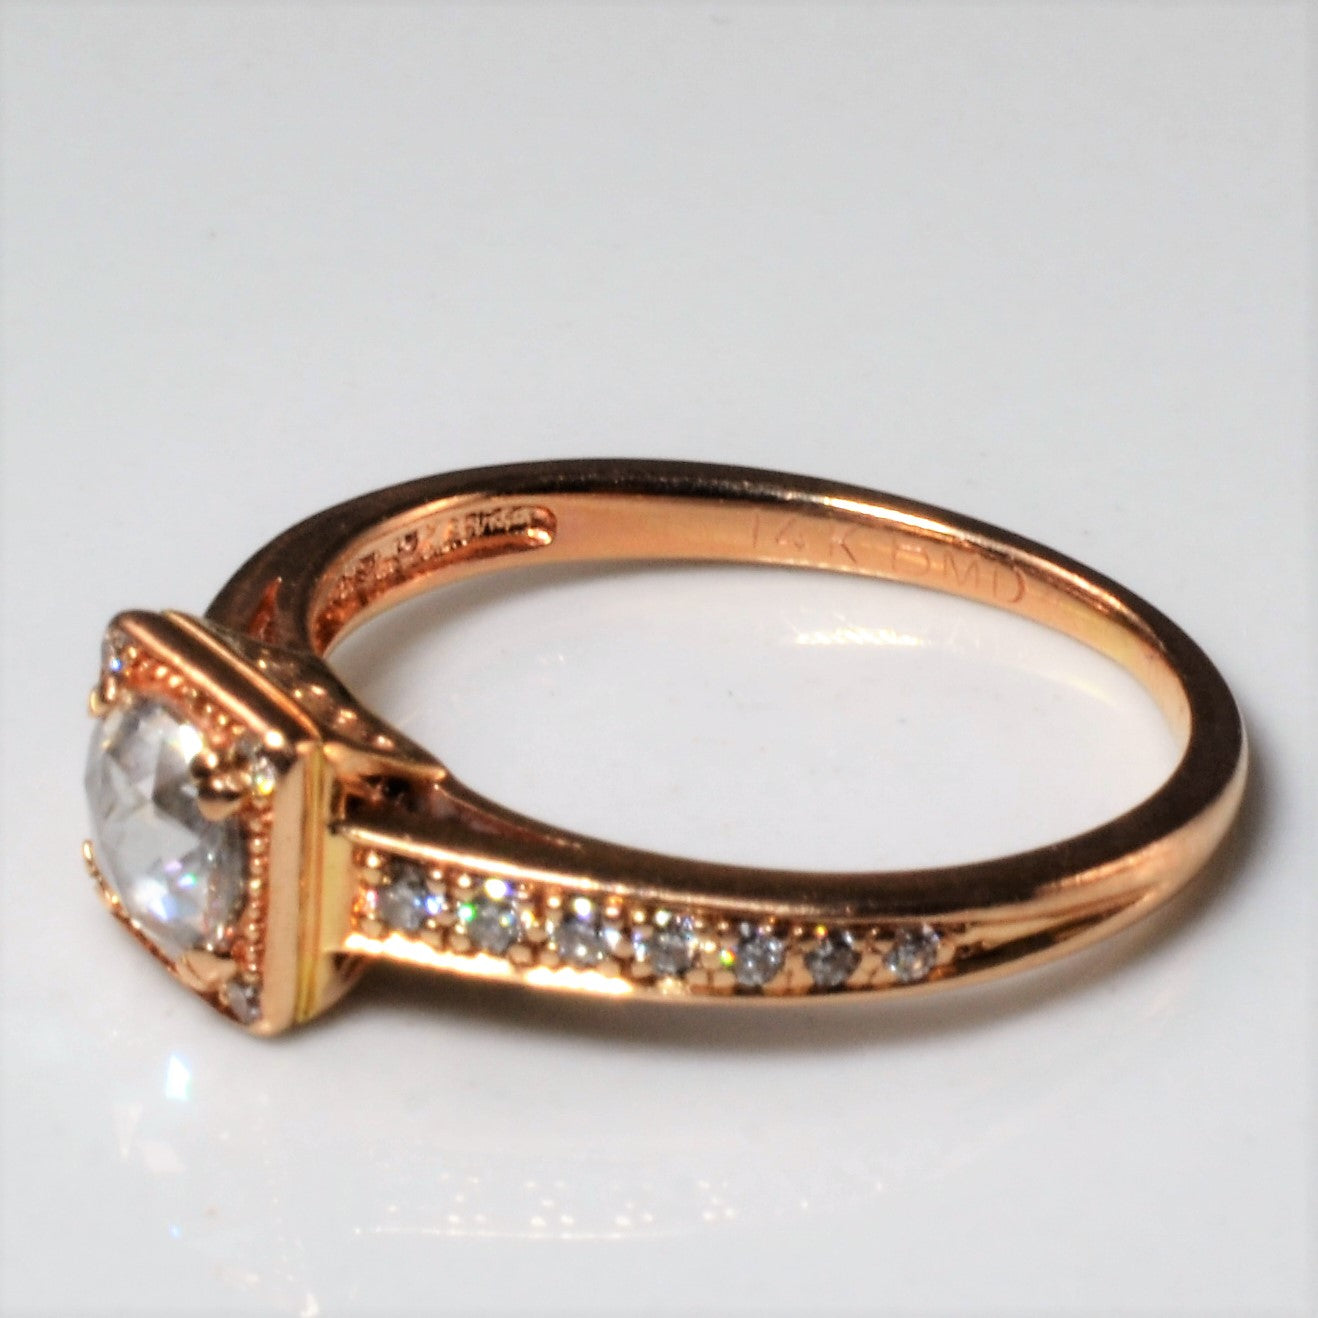 Salt & Pepper Rose Cut Diamond Engagement Ring | 0.35ctw | SZ 4.75 |